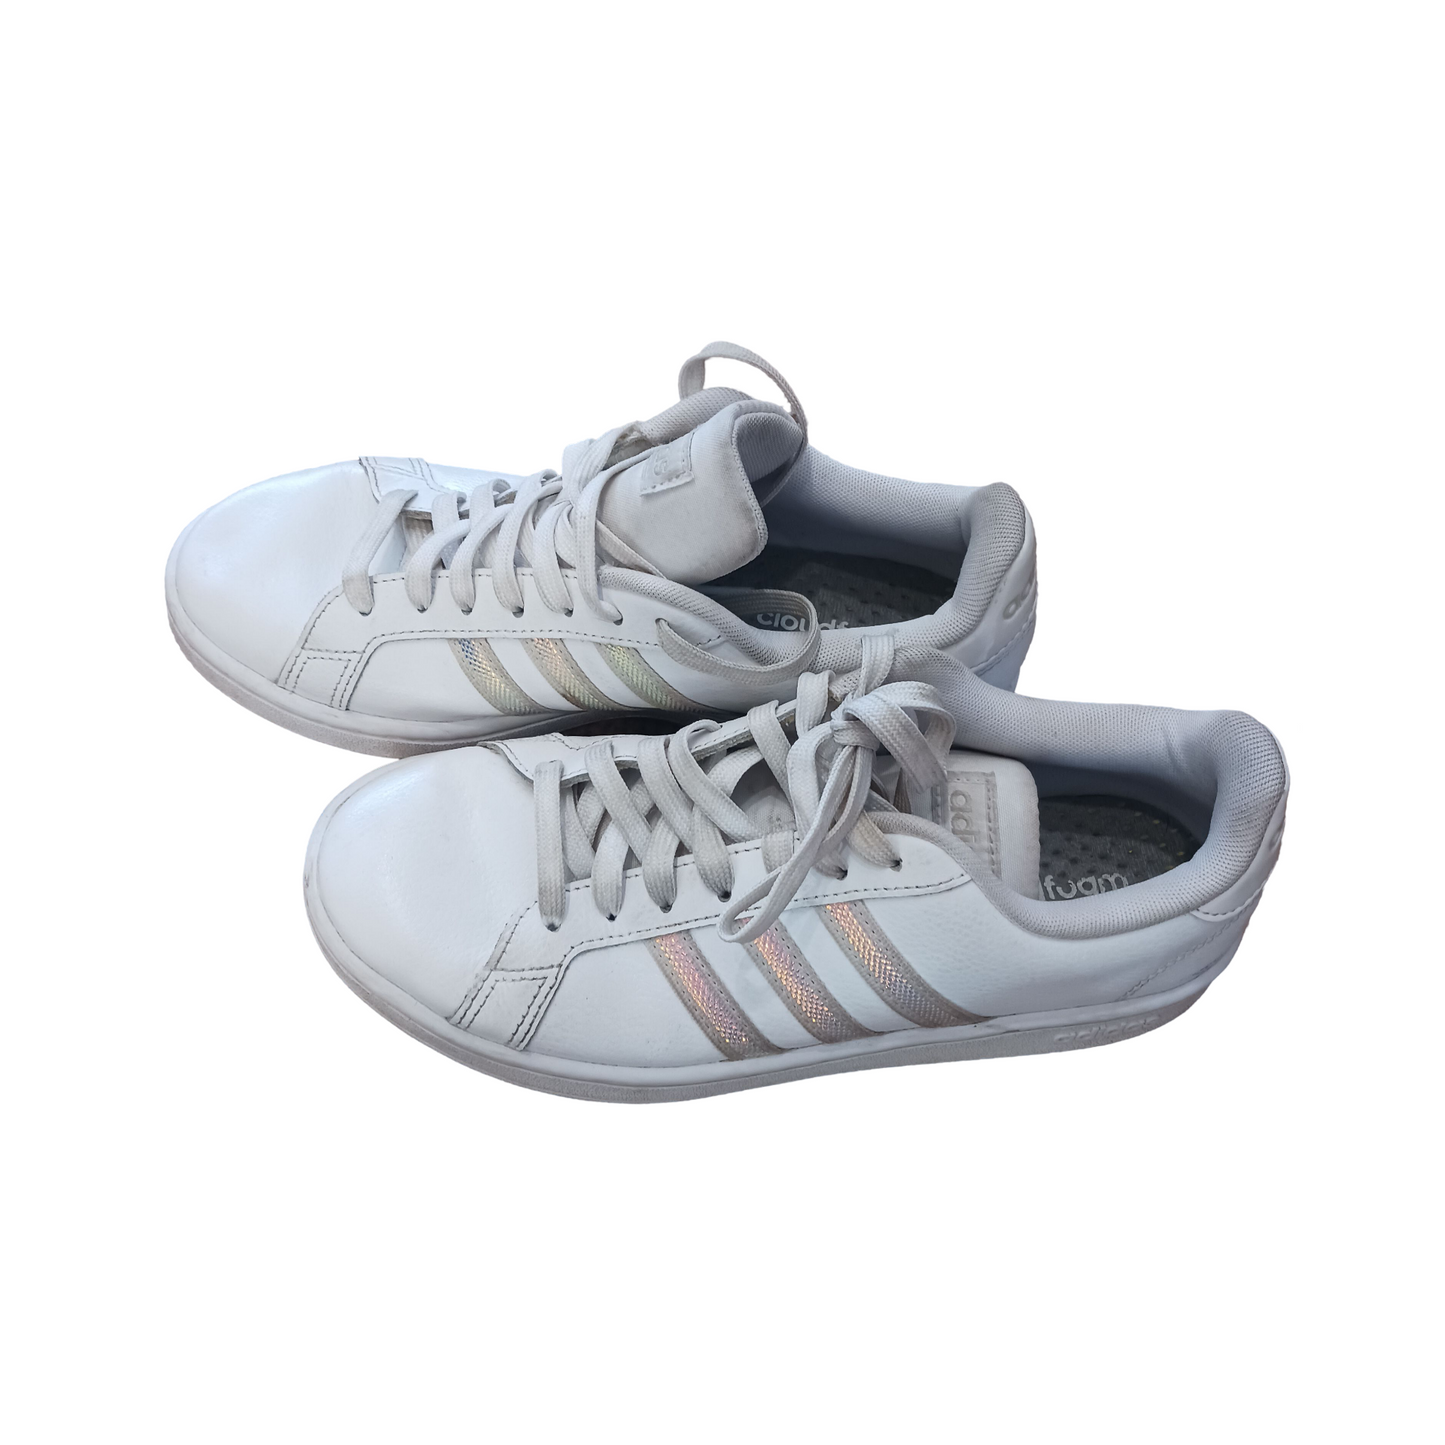 Adidas White Shoes, Cloudfoam, Size 7